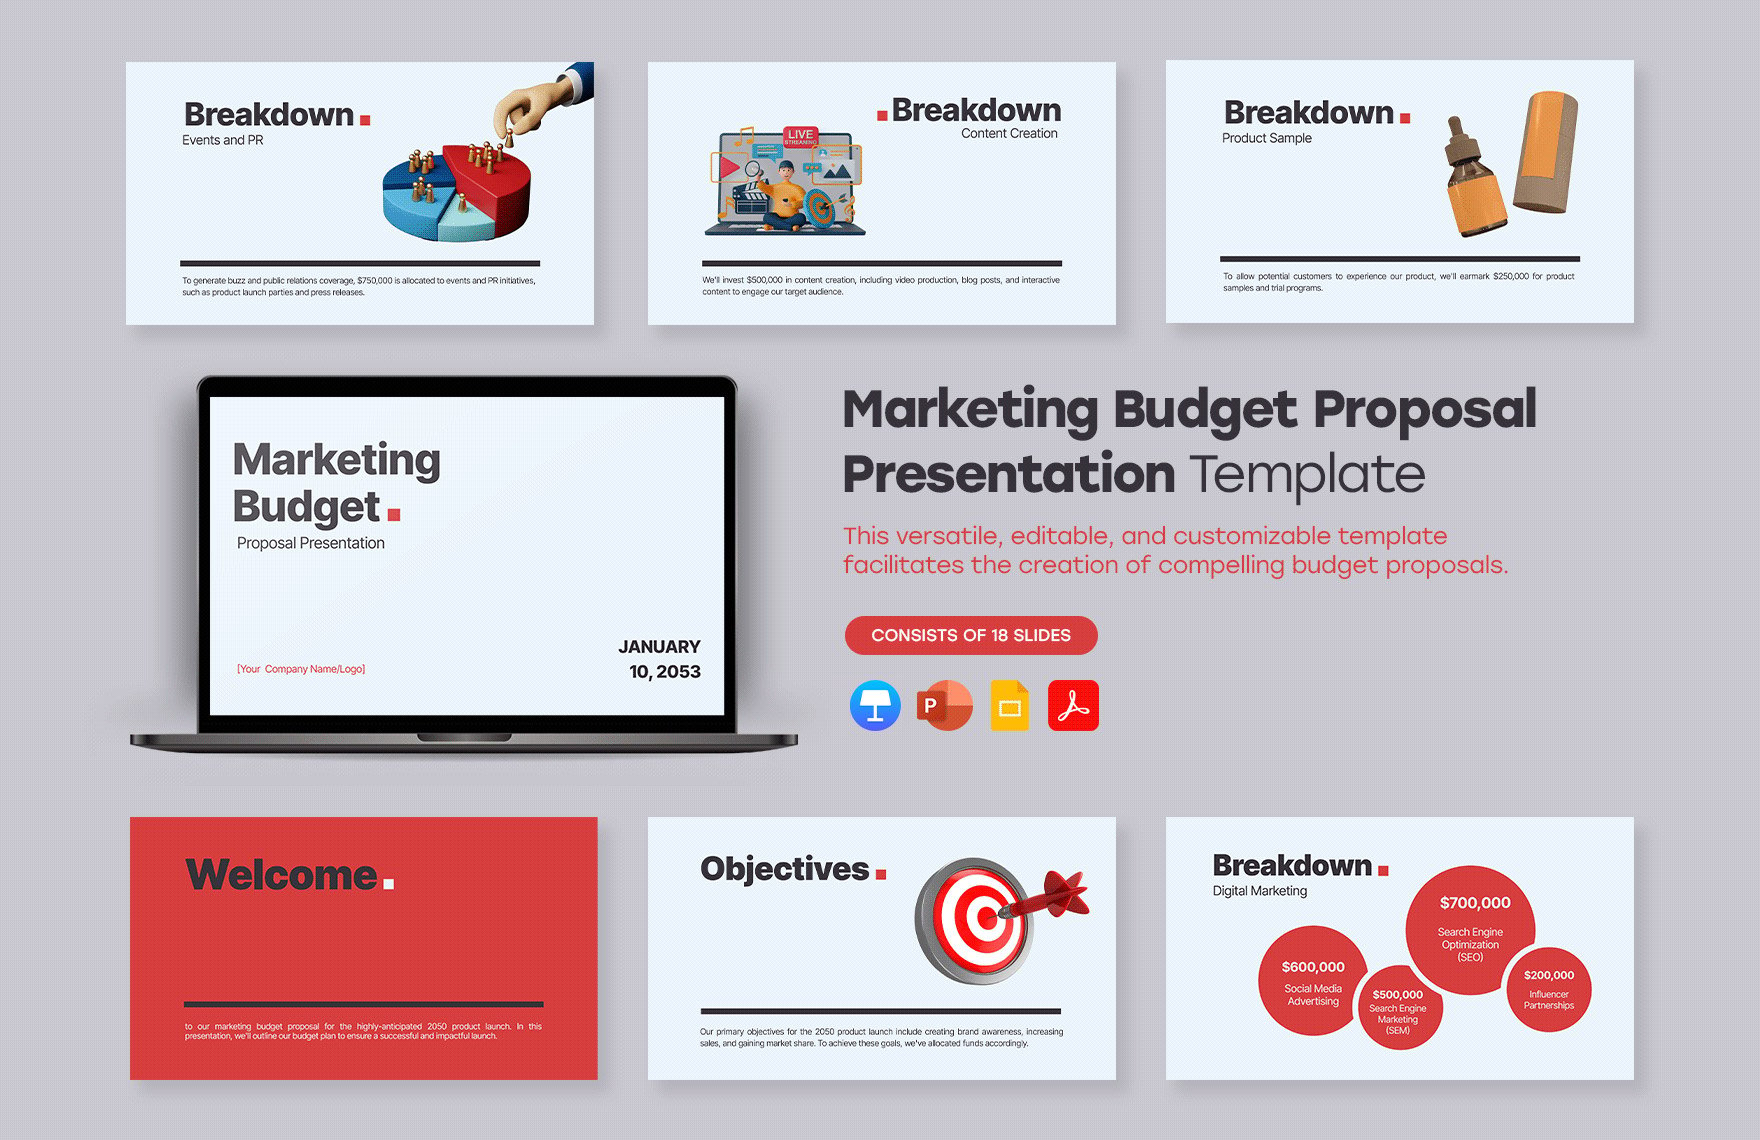 Marketing Budget Proposal Presentation Template